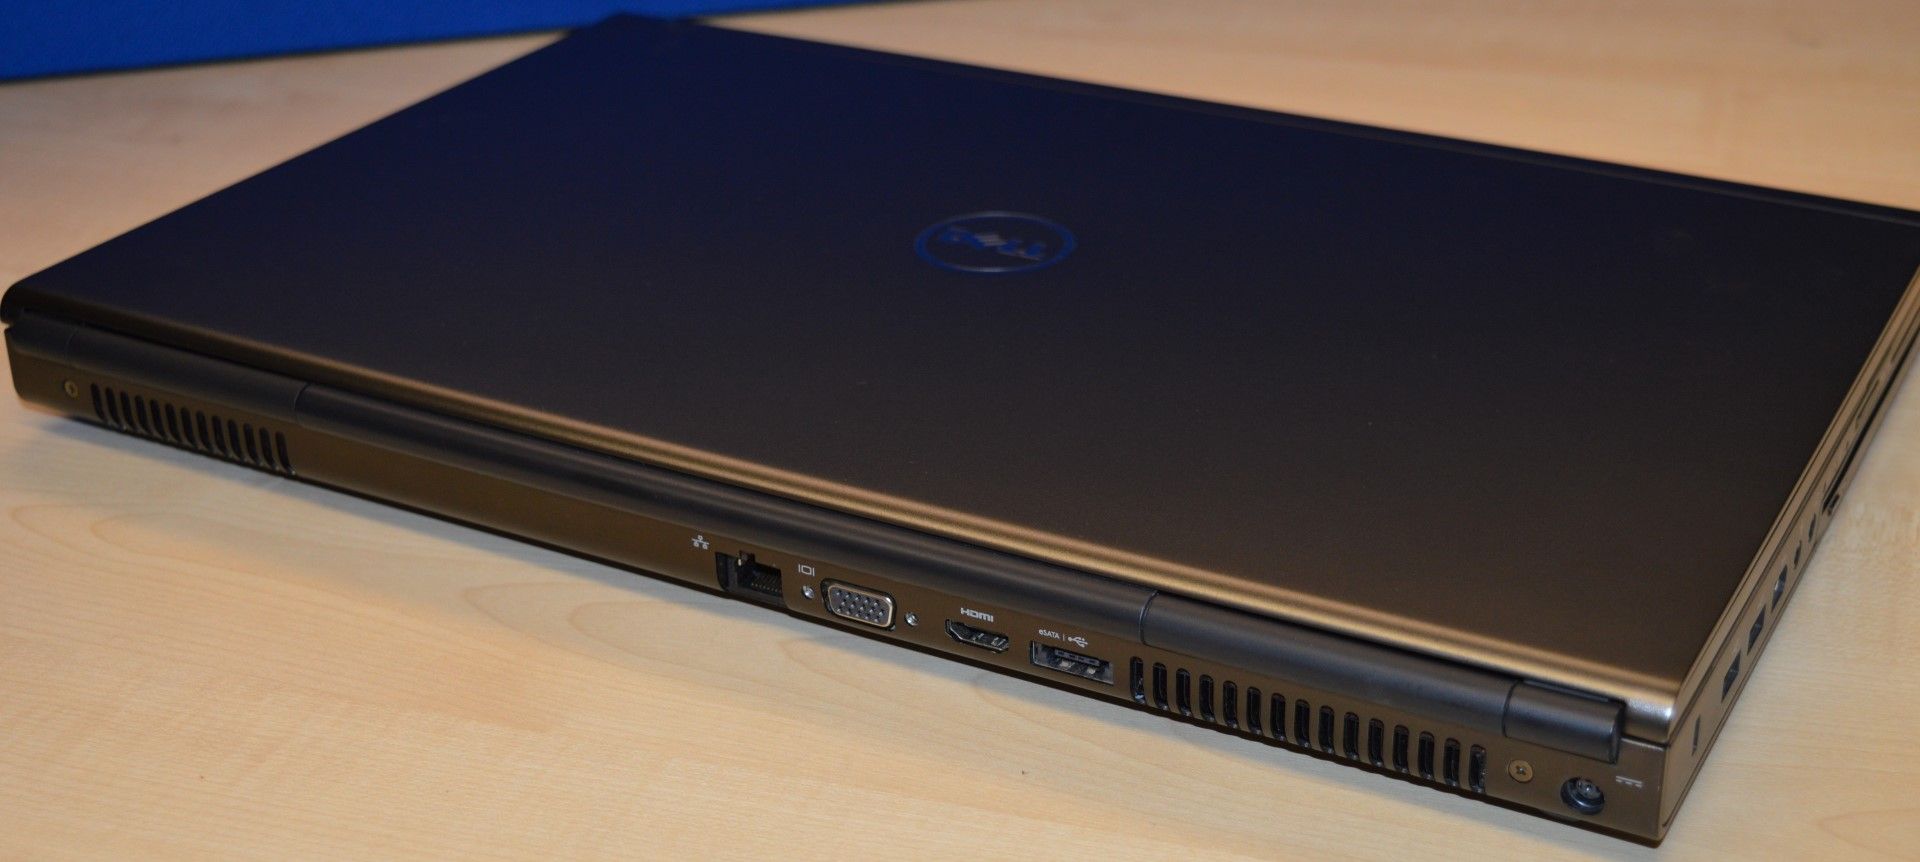 1 x Dell Precision M6700 Business Workstation 17 Inch Laptop - Intel Core i7 2.7ghz Quad Core - Image 12 of 22